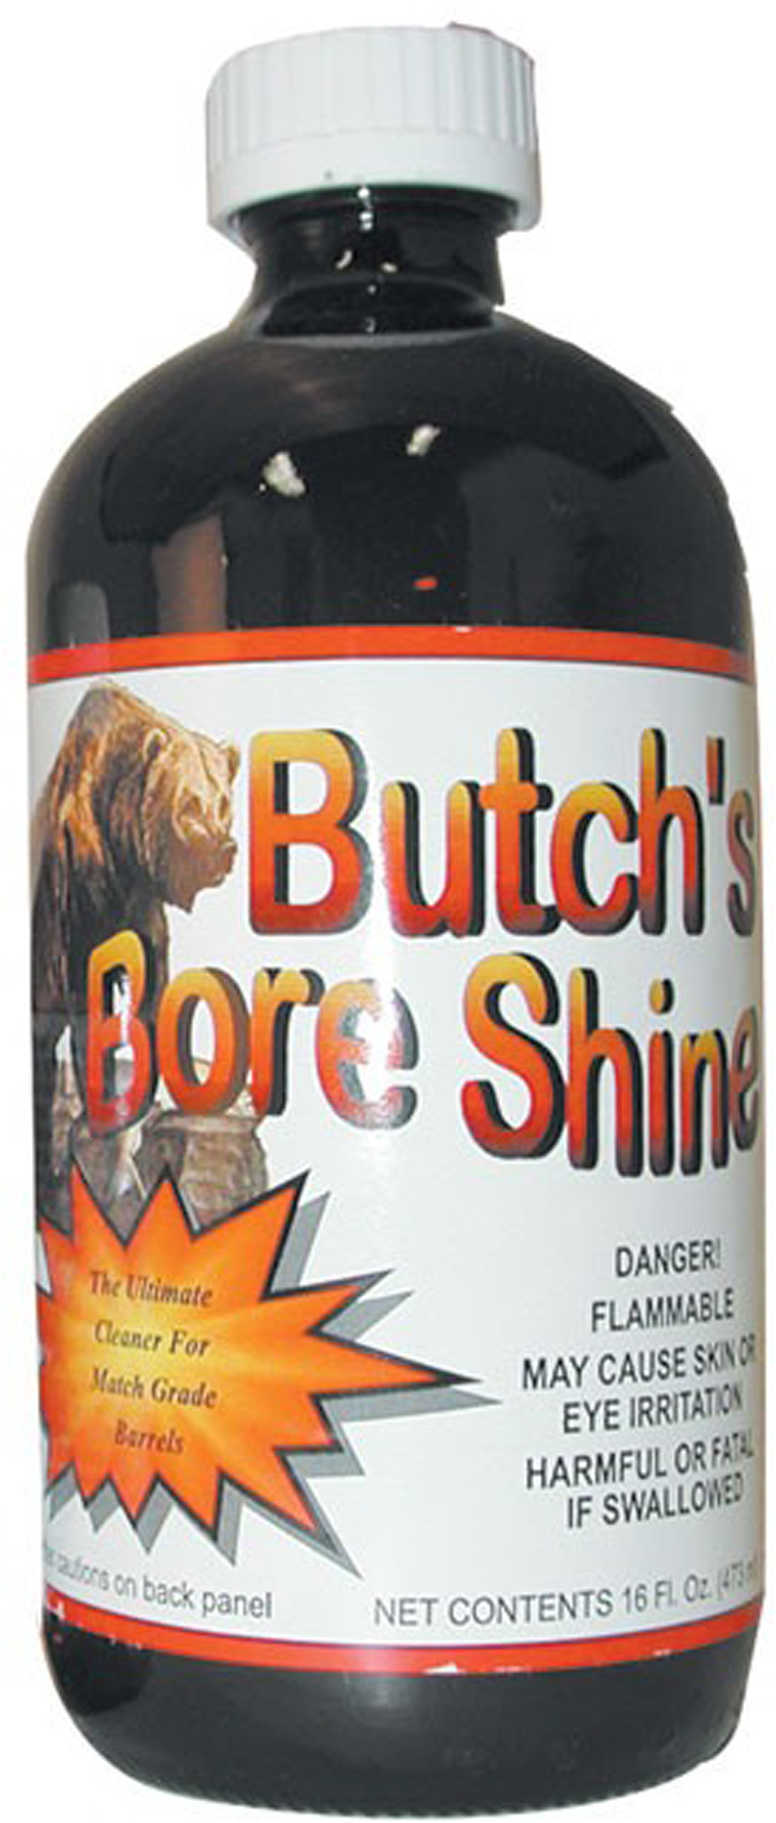 Pachmayr Butchs Bore Shine - 4 Oz